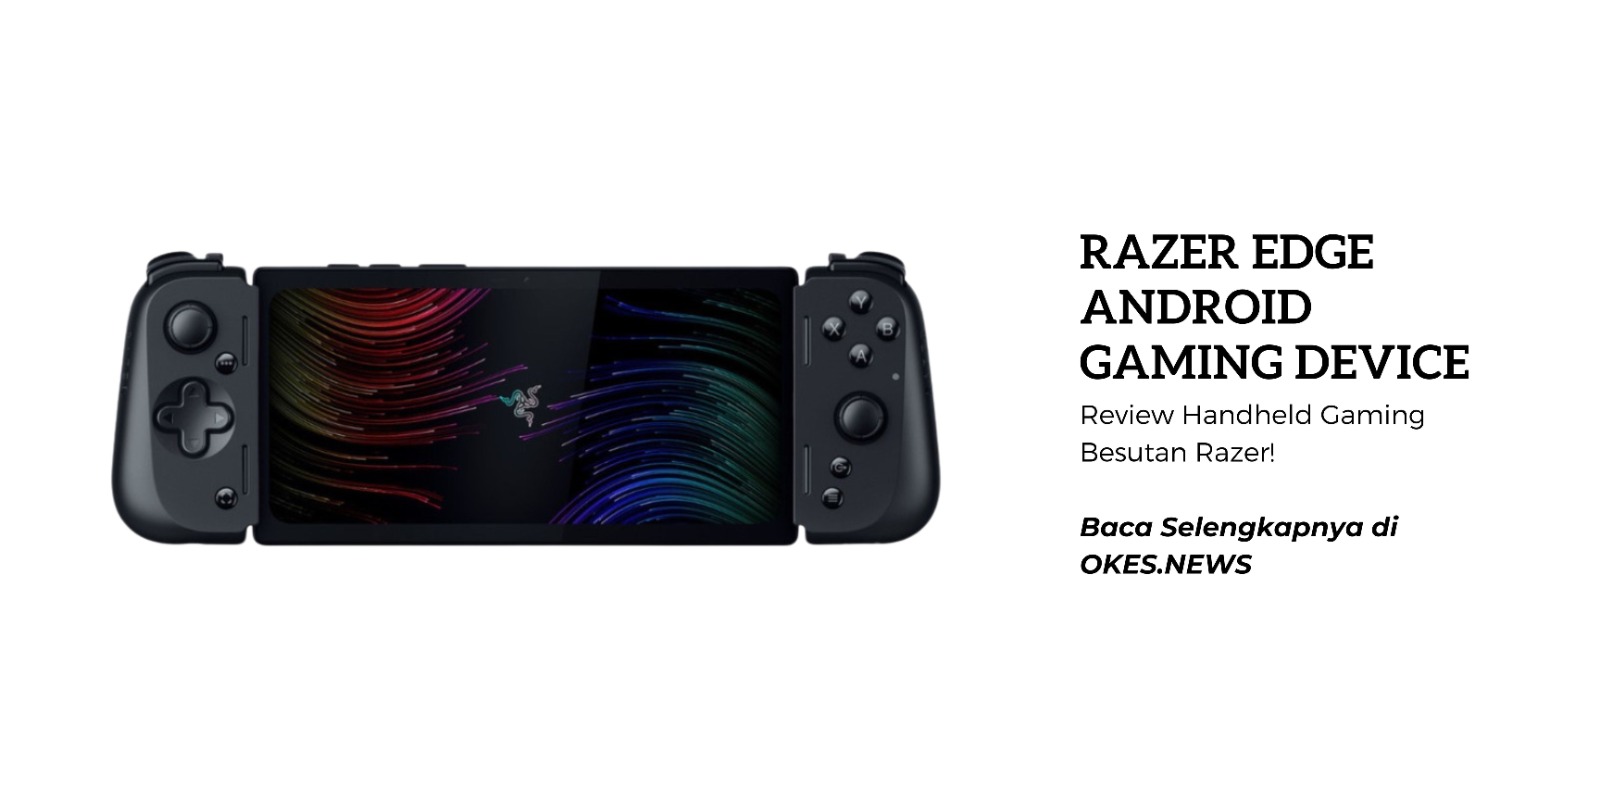 Review Handheld Gaming Besutan Razer! Inilah Razer Edge Android Gaming Device!